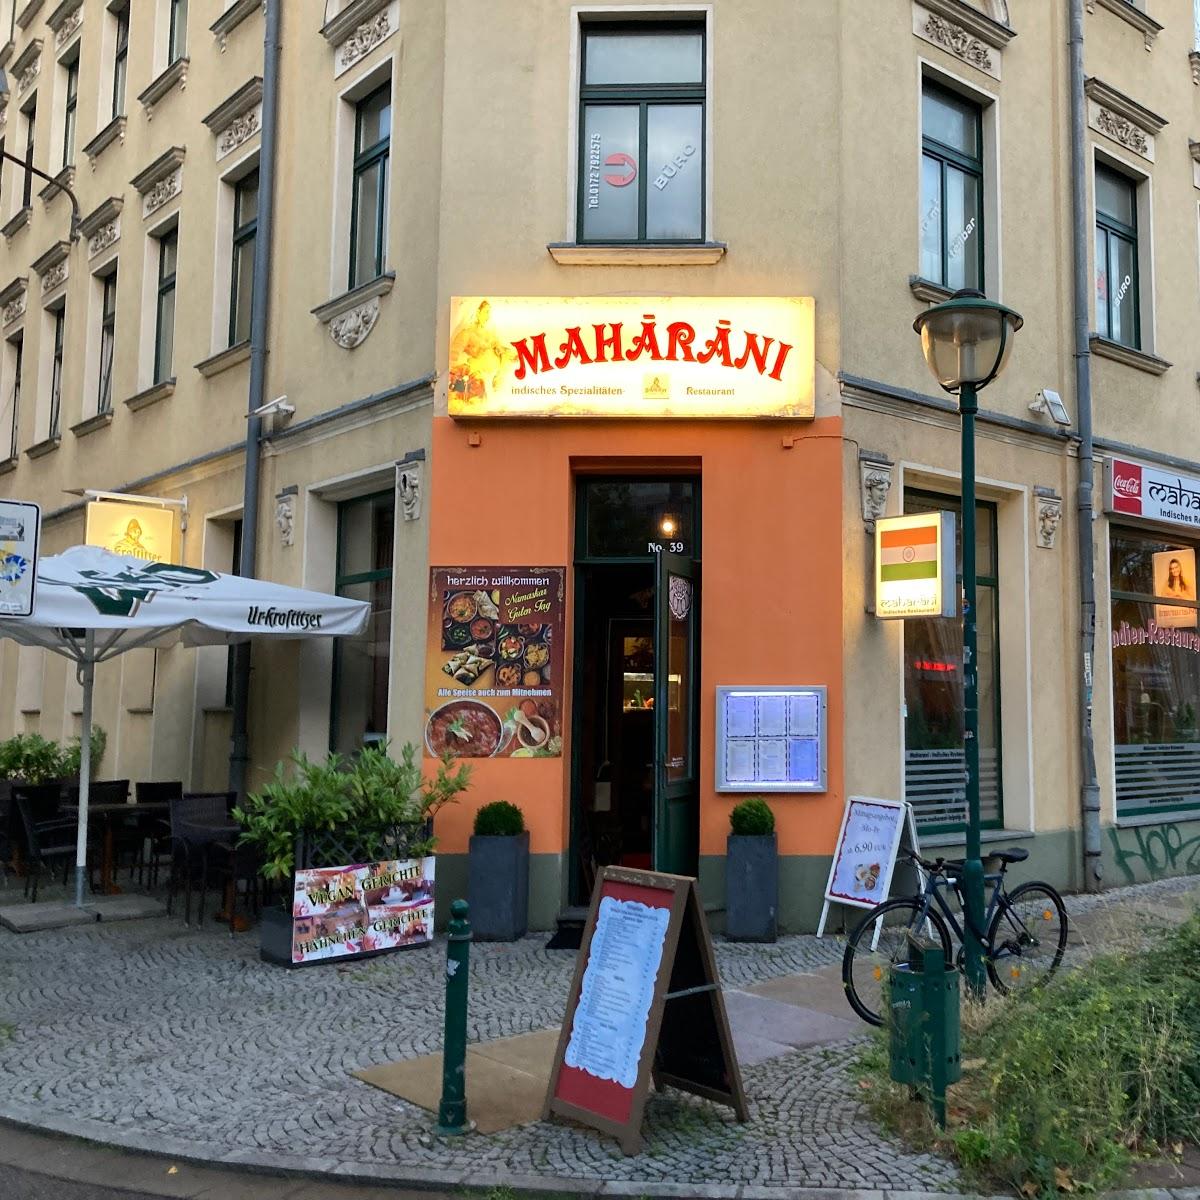 Restaurant "Maharani Leipzig" in Leipzig